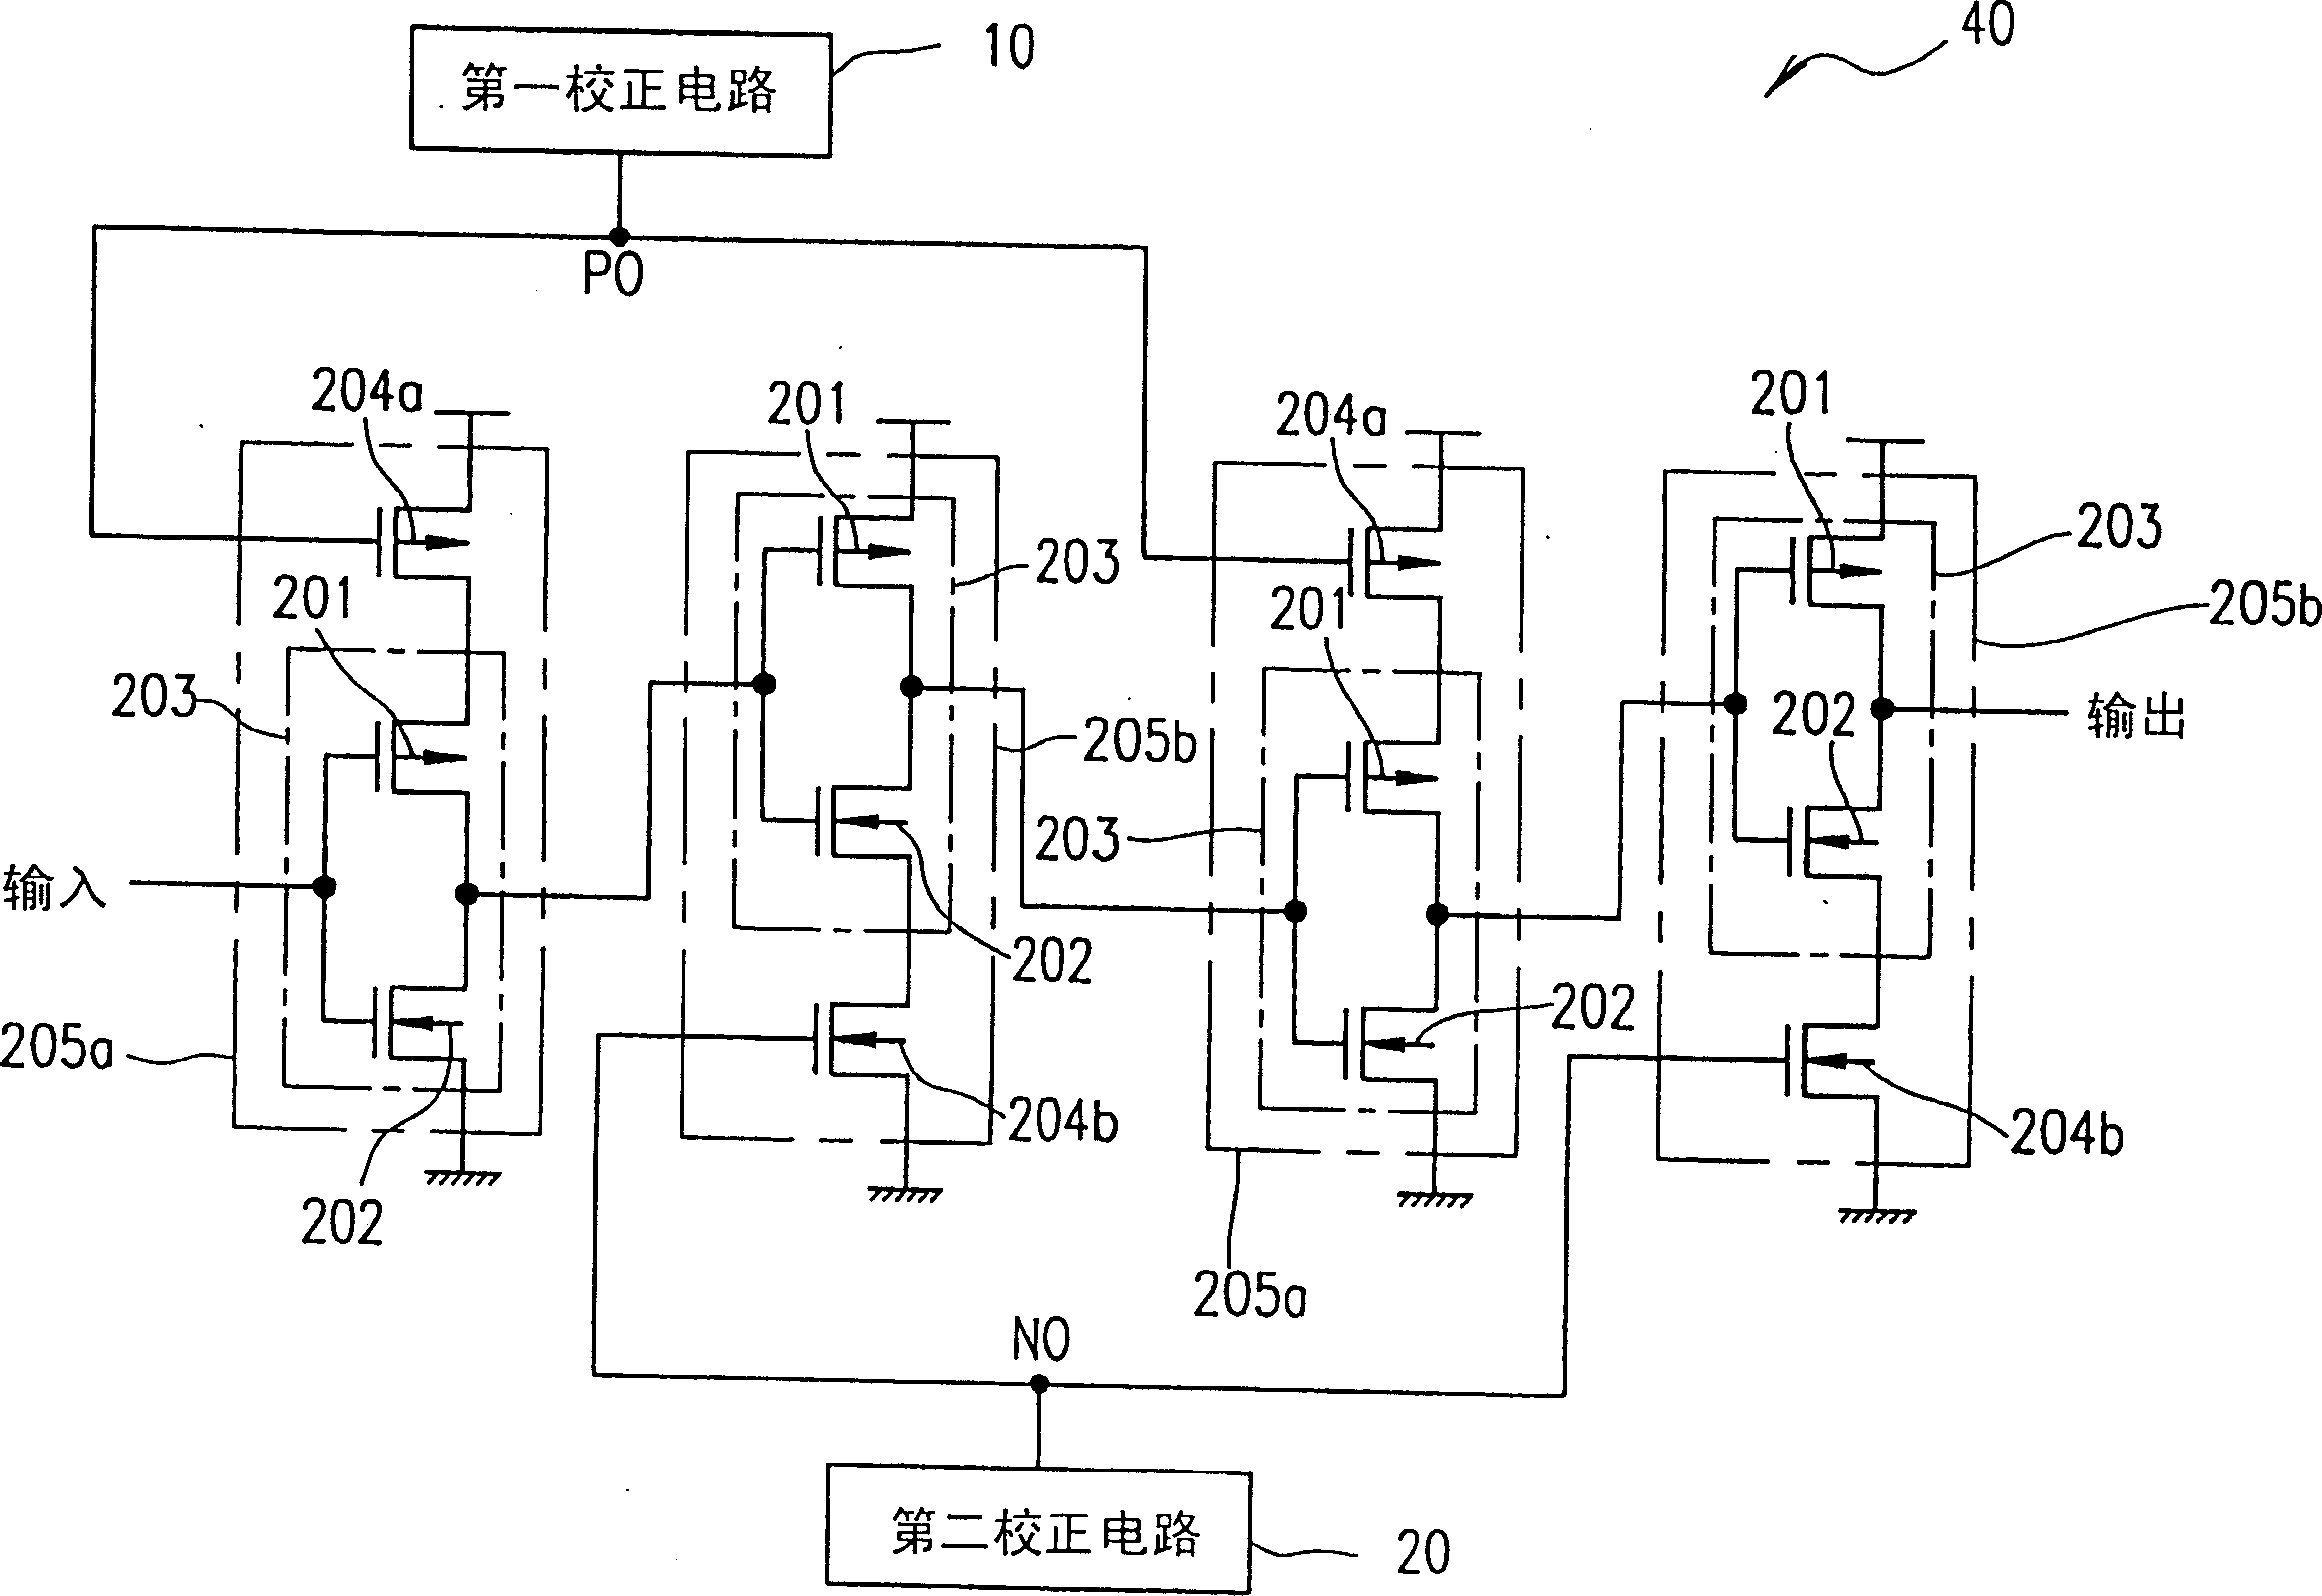 Correction circuit, delay circuit and annular oscillator circuit